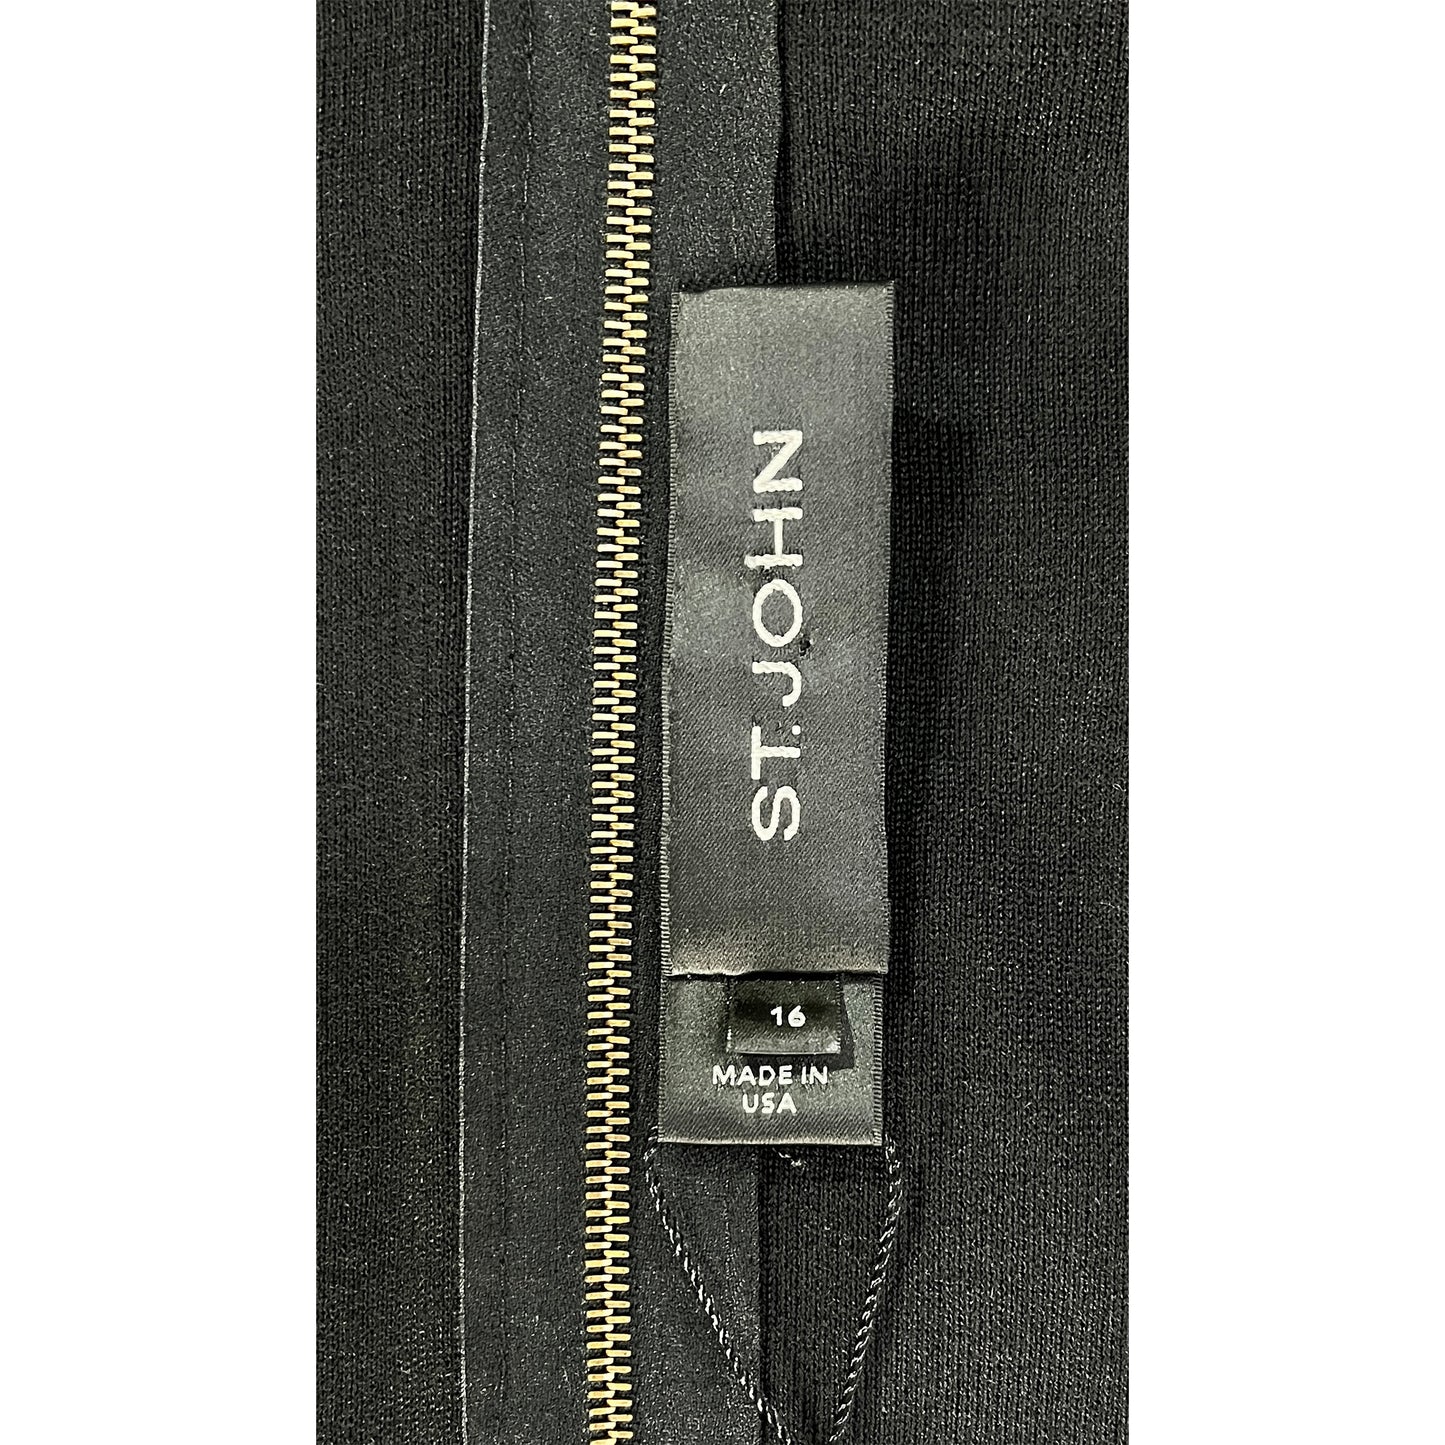 St. John Top Long Cape-Sleeves Leather Trim Details Black Size 16 SKU 000121-13